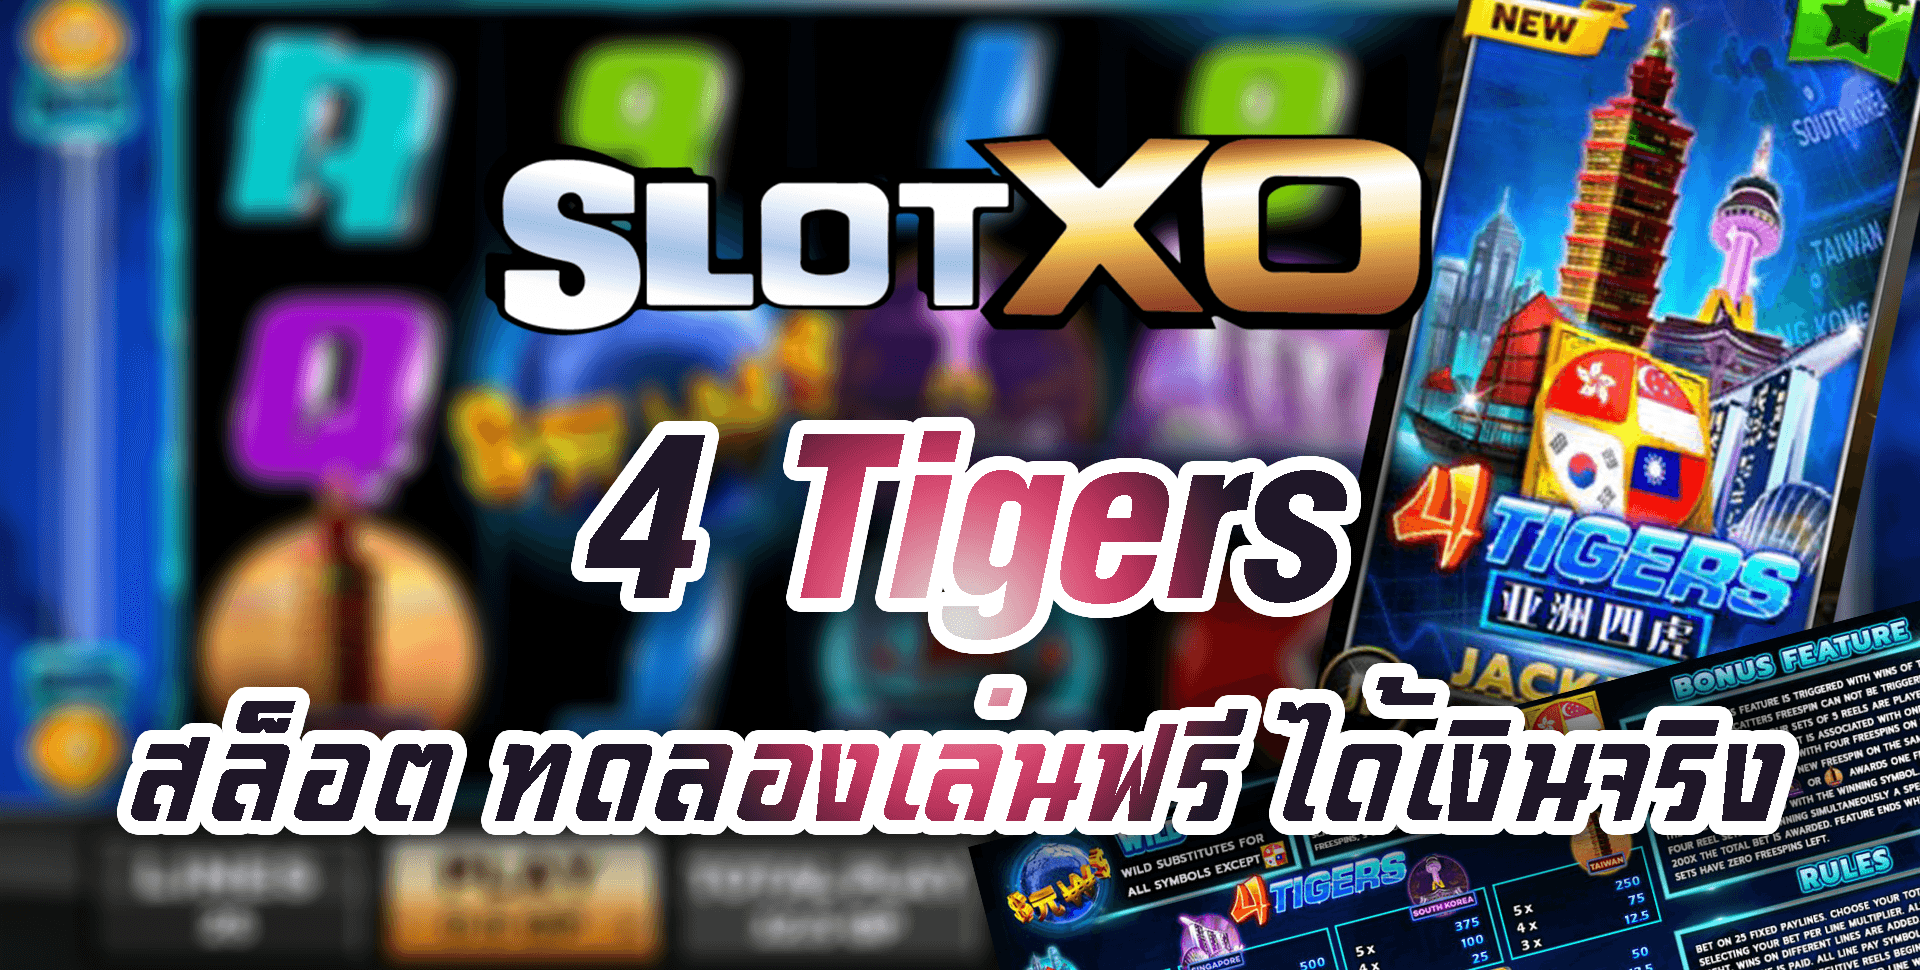 Slot xo-4-Tigers-5